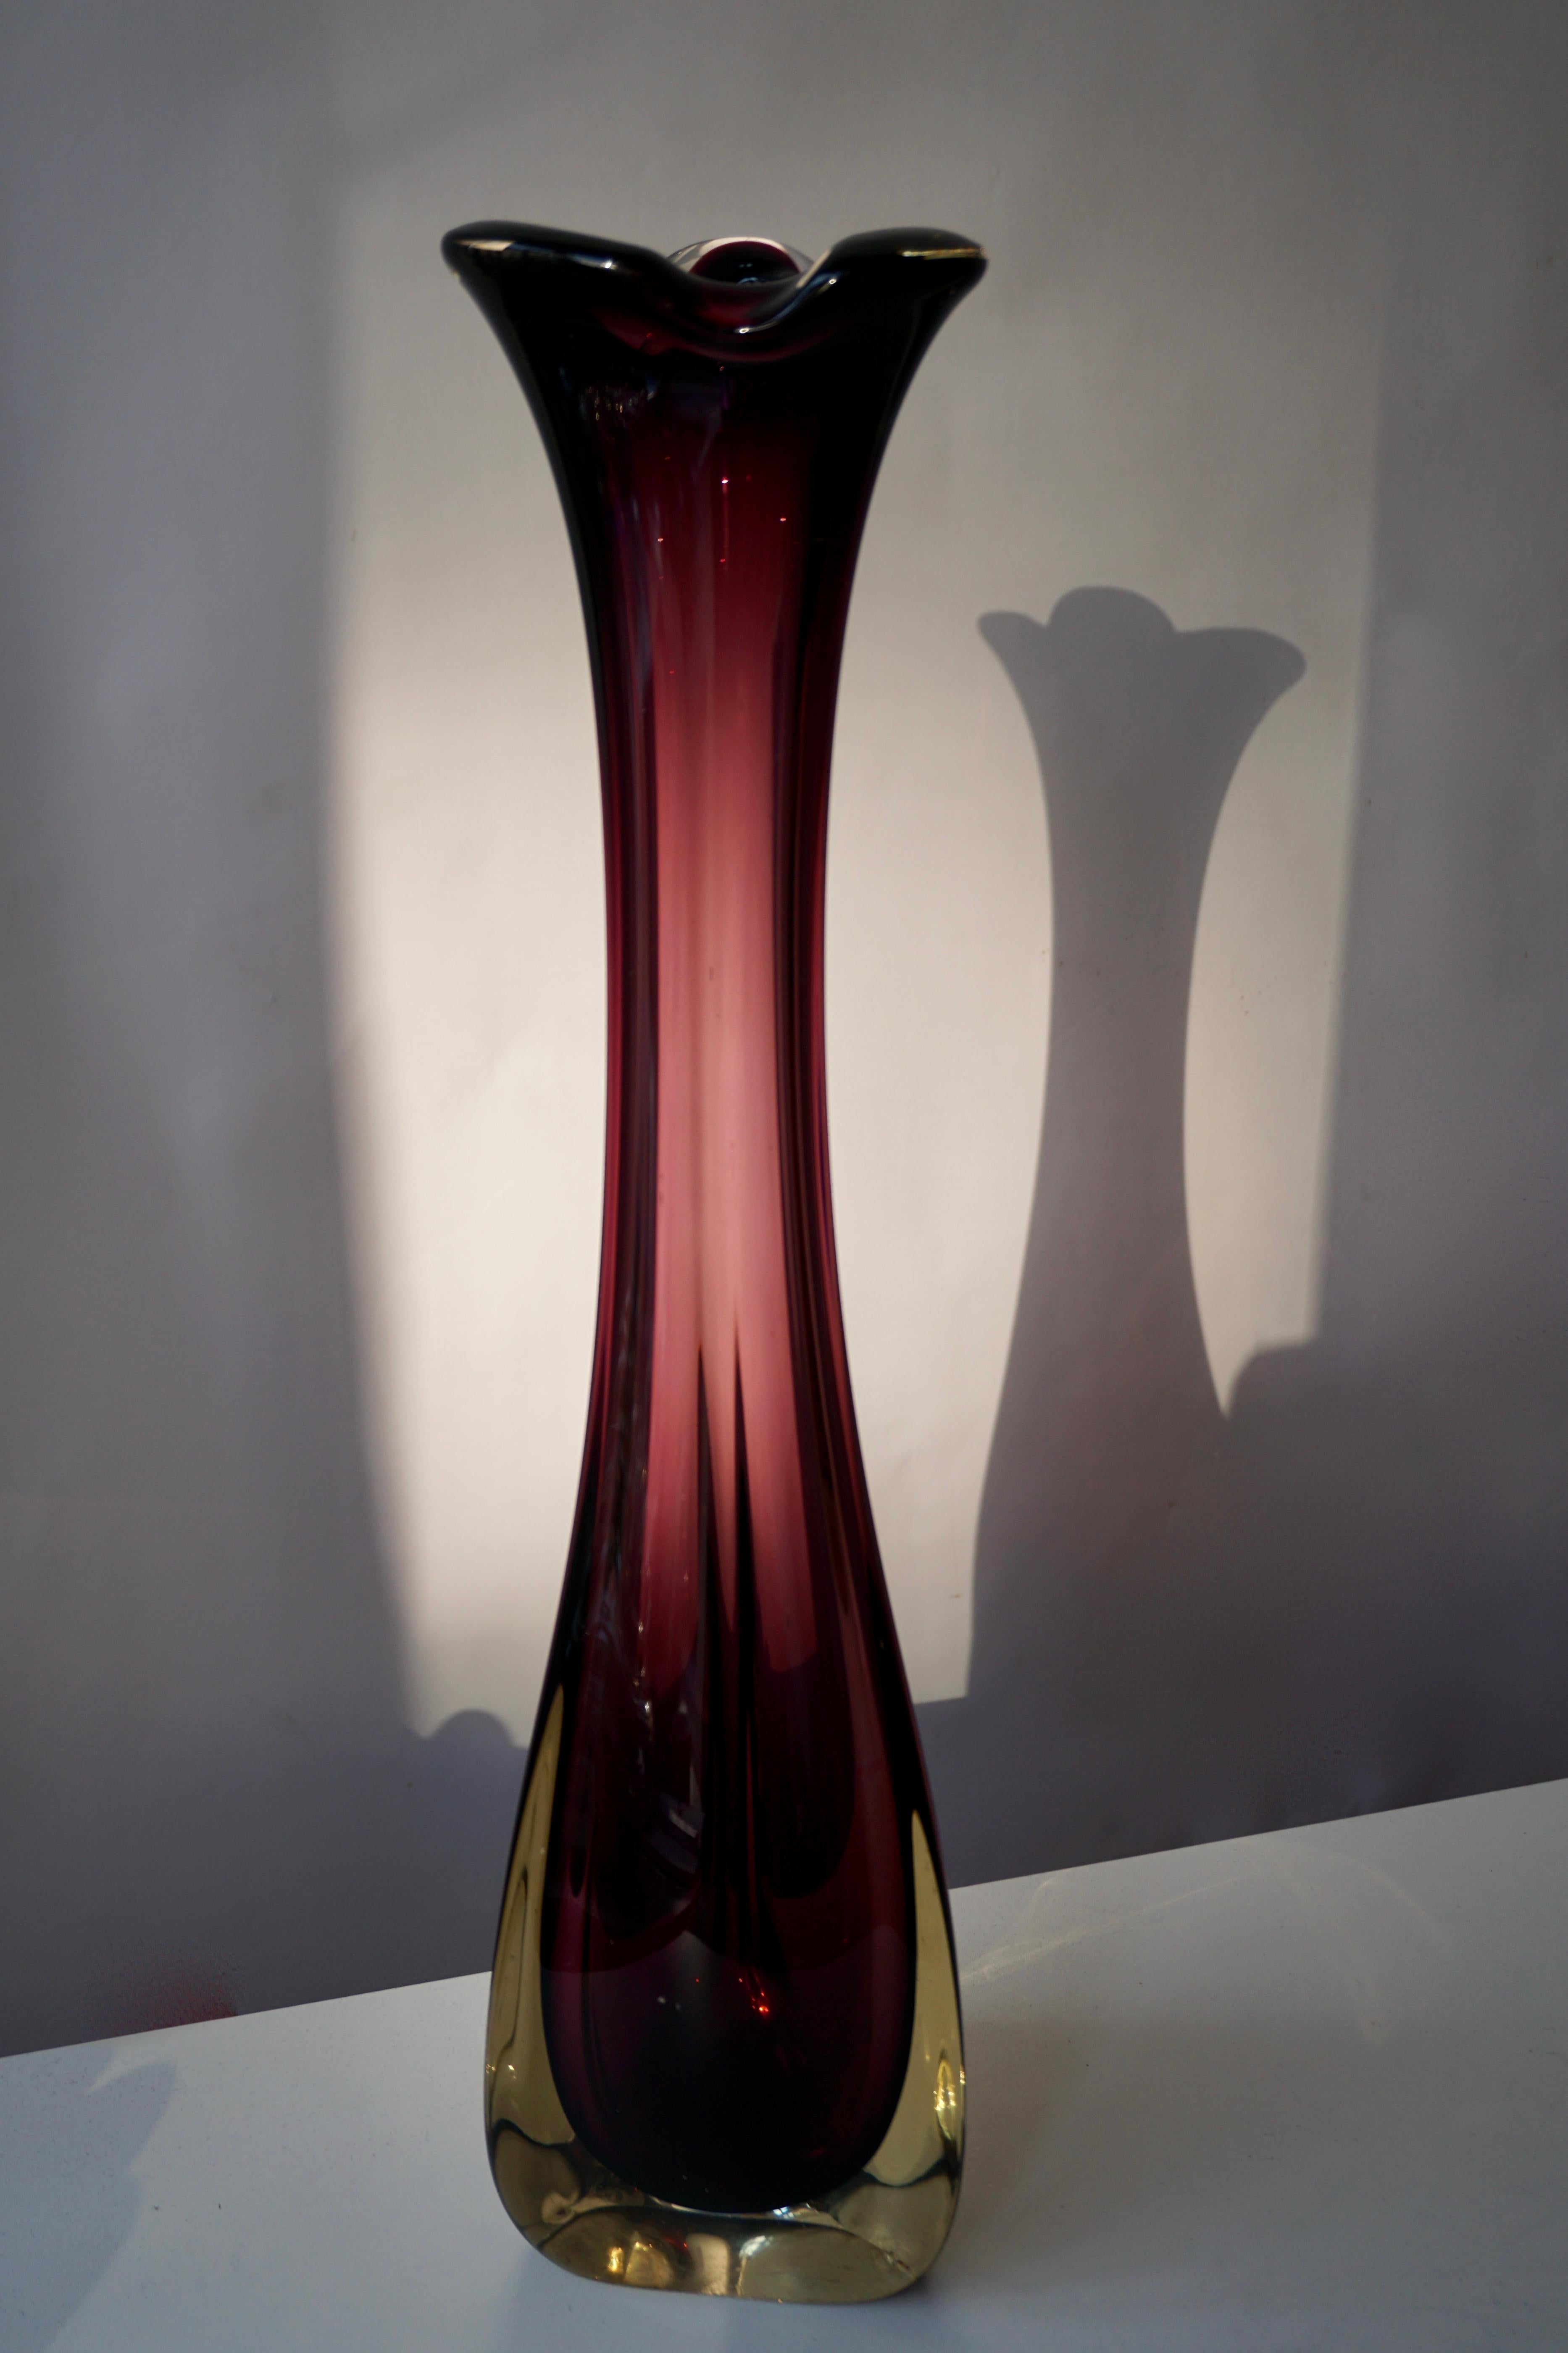 Large purple Italian Murano glass vase.
Measures: Height 52 cm.
Diameter 12 cm.
Weight 2 kg.